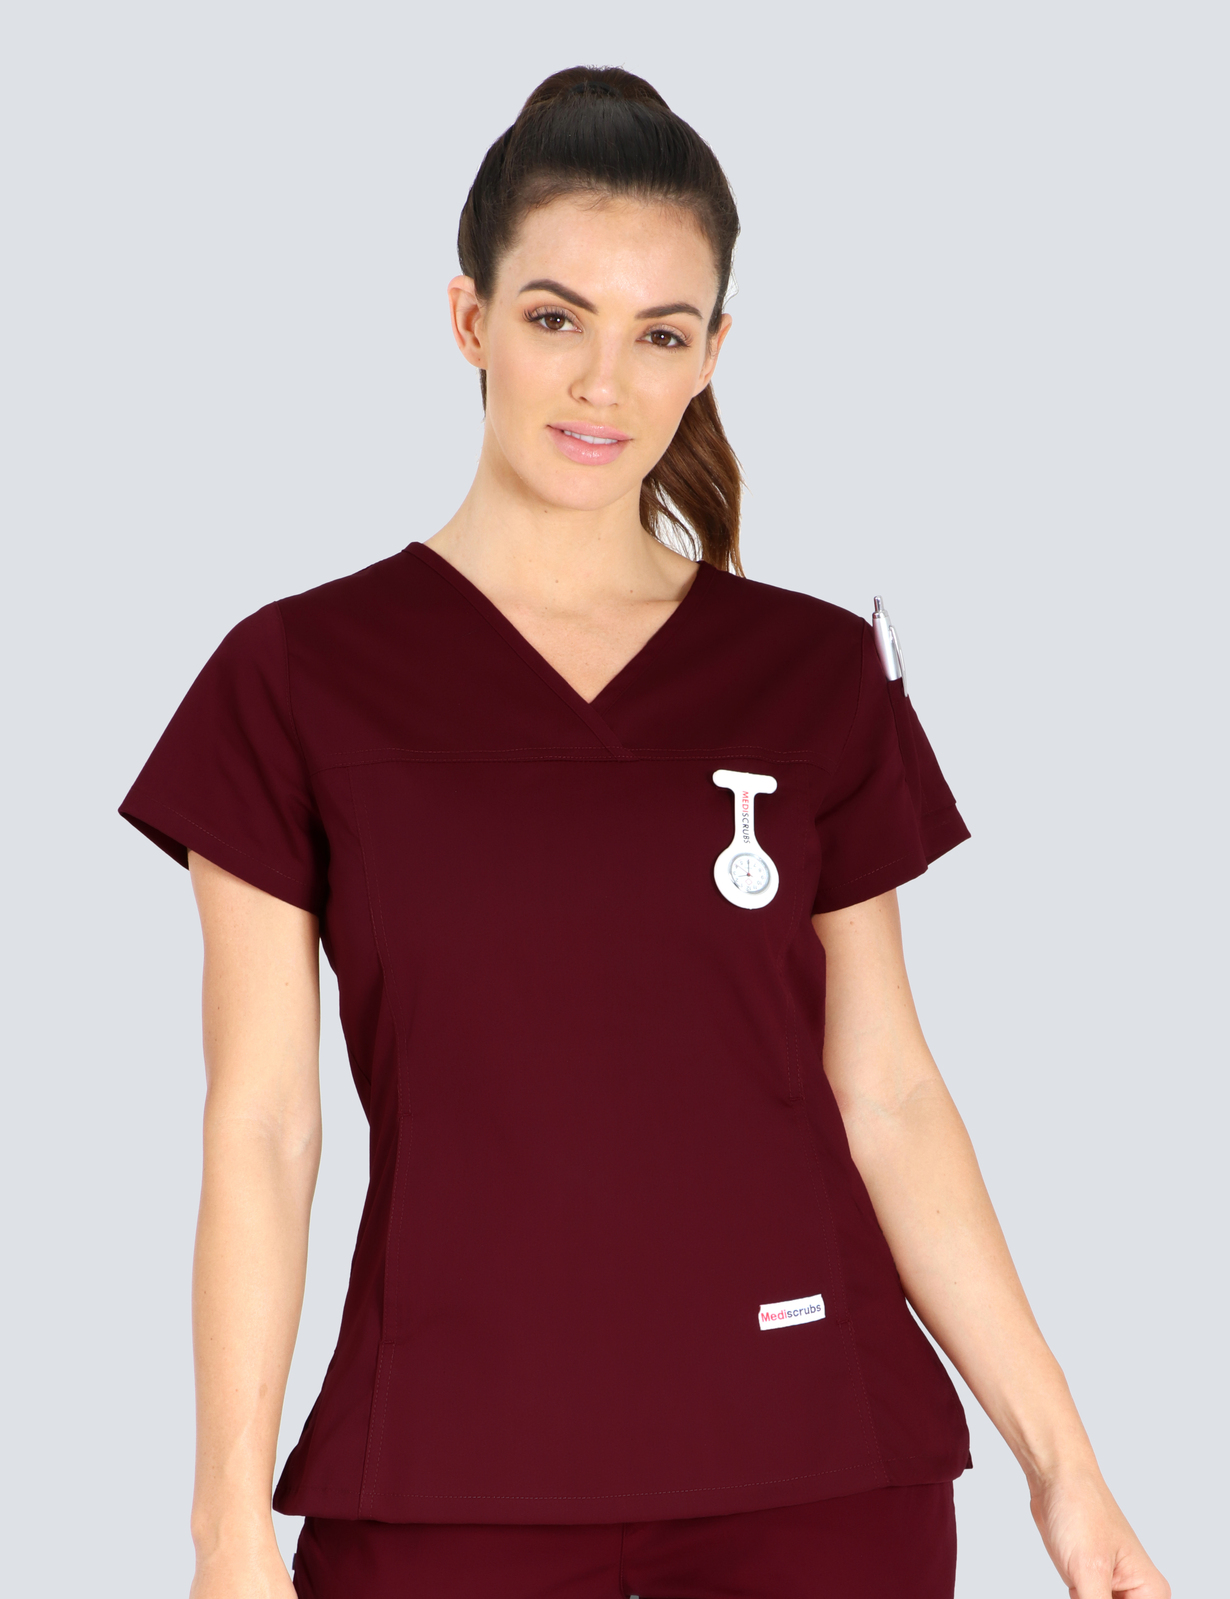 Queensland Children's Hospital Emergency Department Enrolled Nurse Uniform Top Bundle  (Women's Fit Top in Burgundy incl Logos)